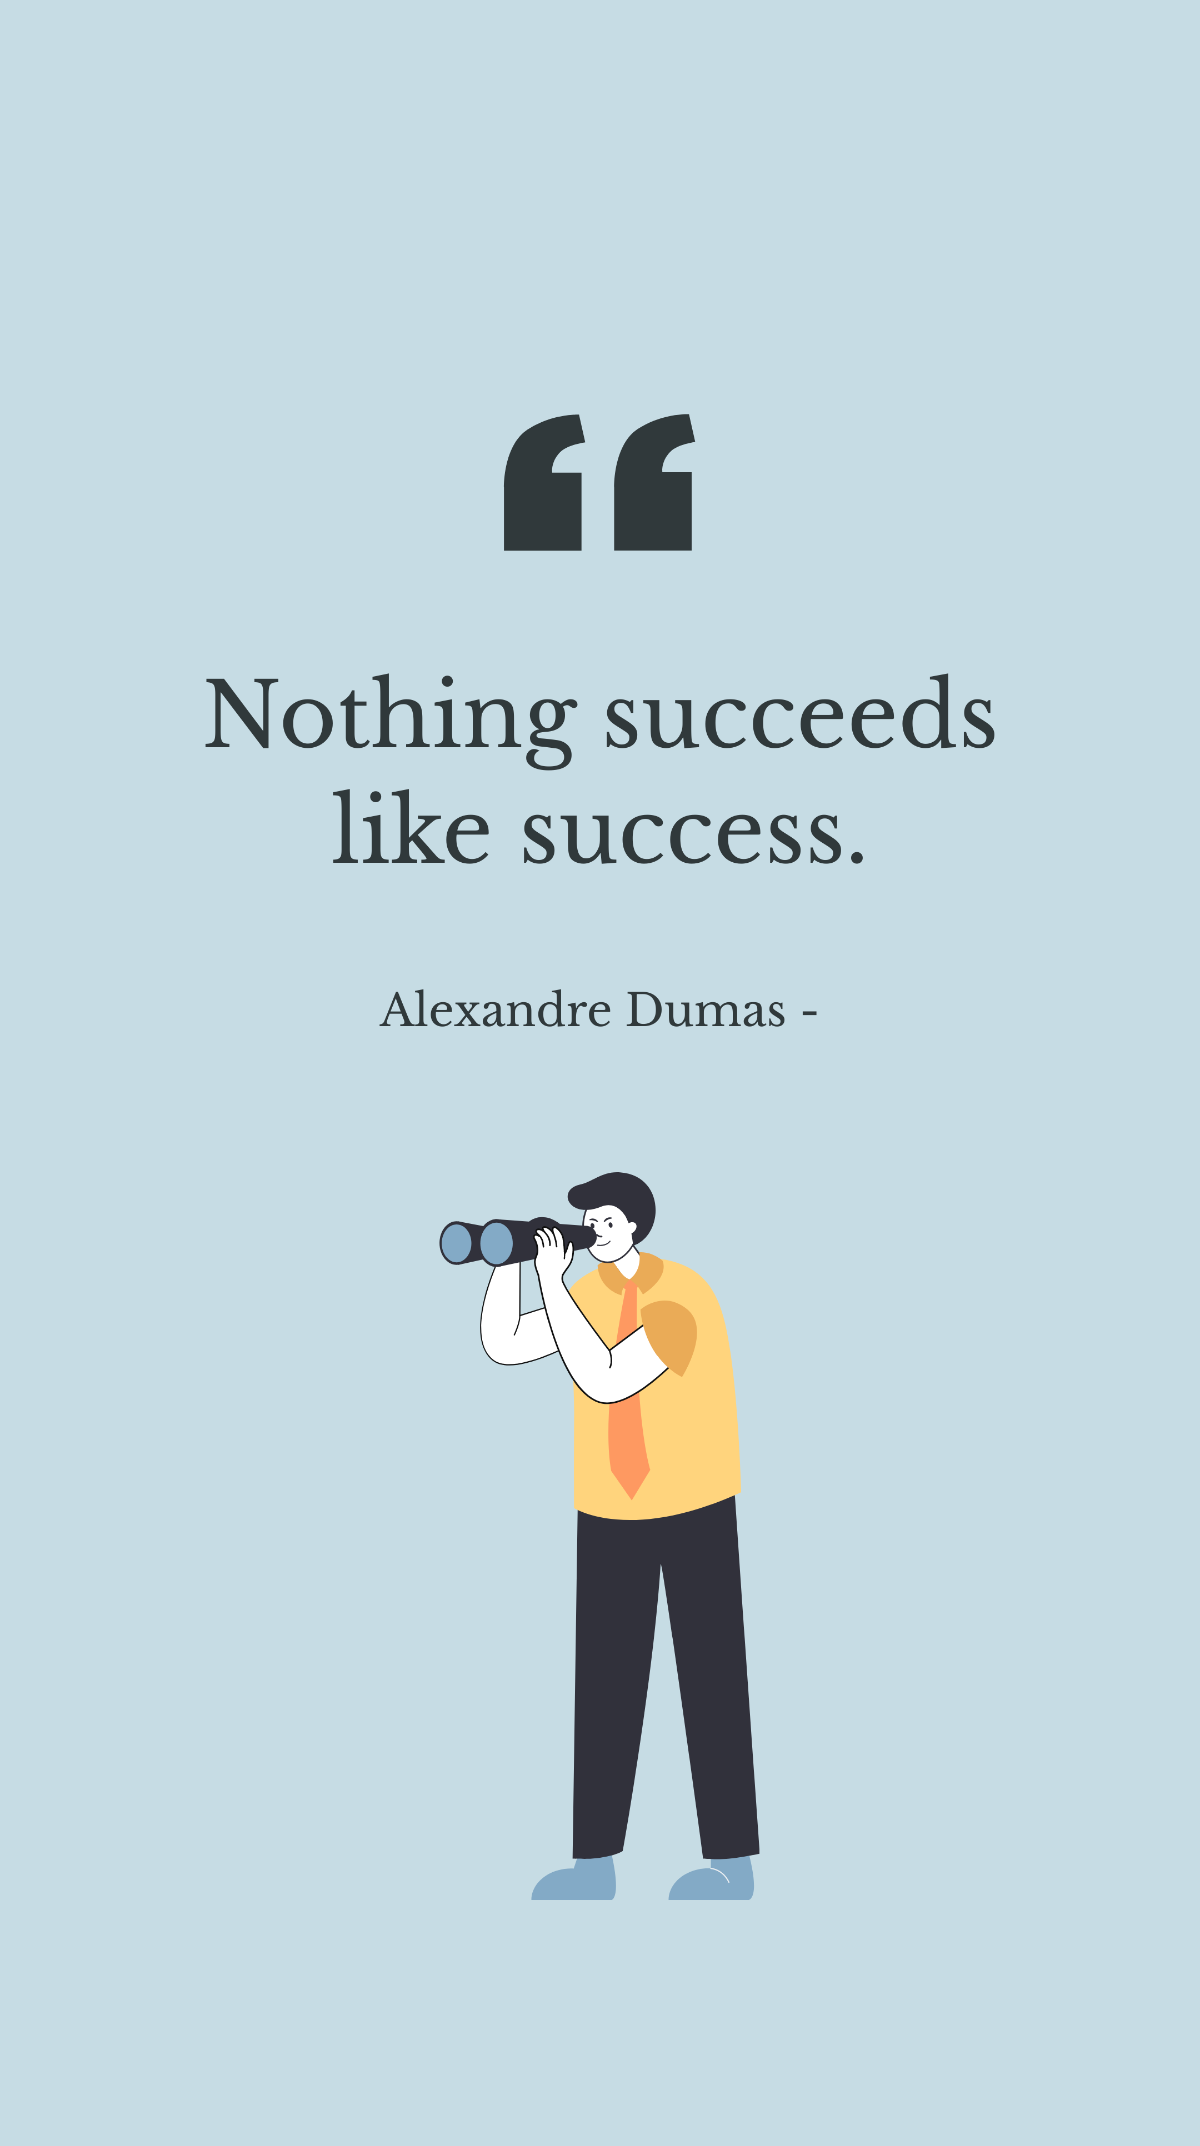 Alexandre Dumas - Nothing succeeds like success.